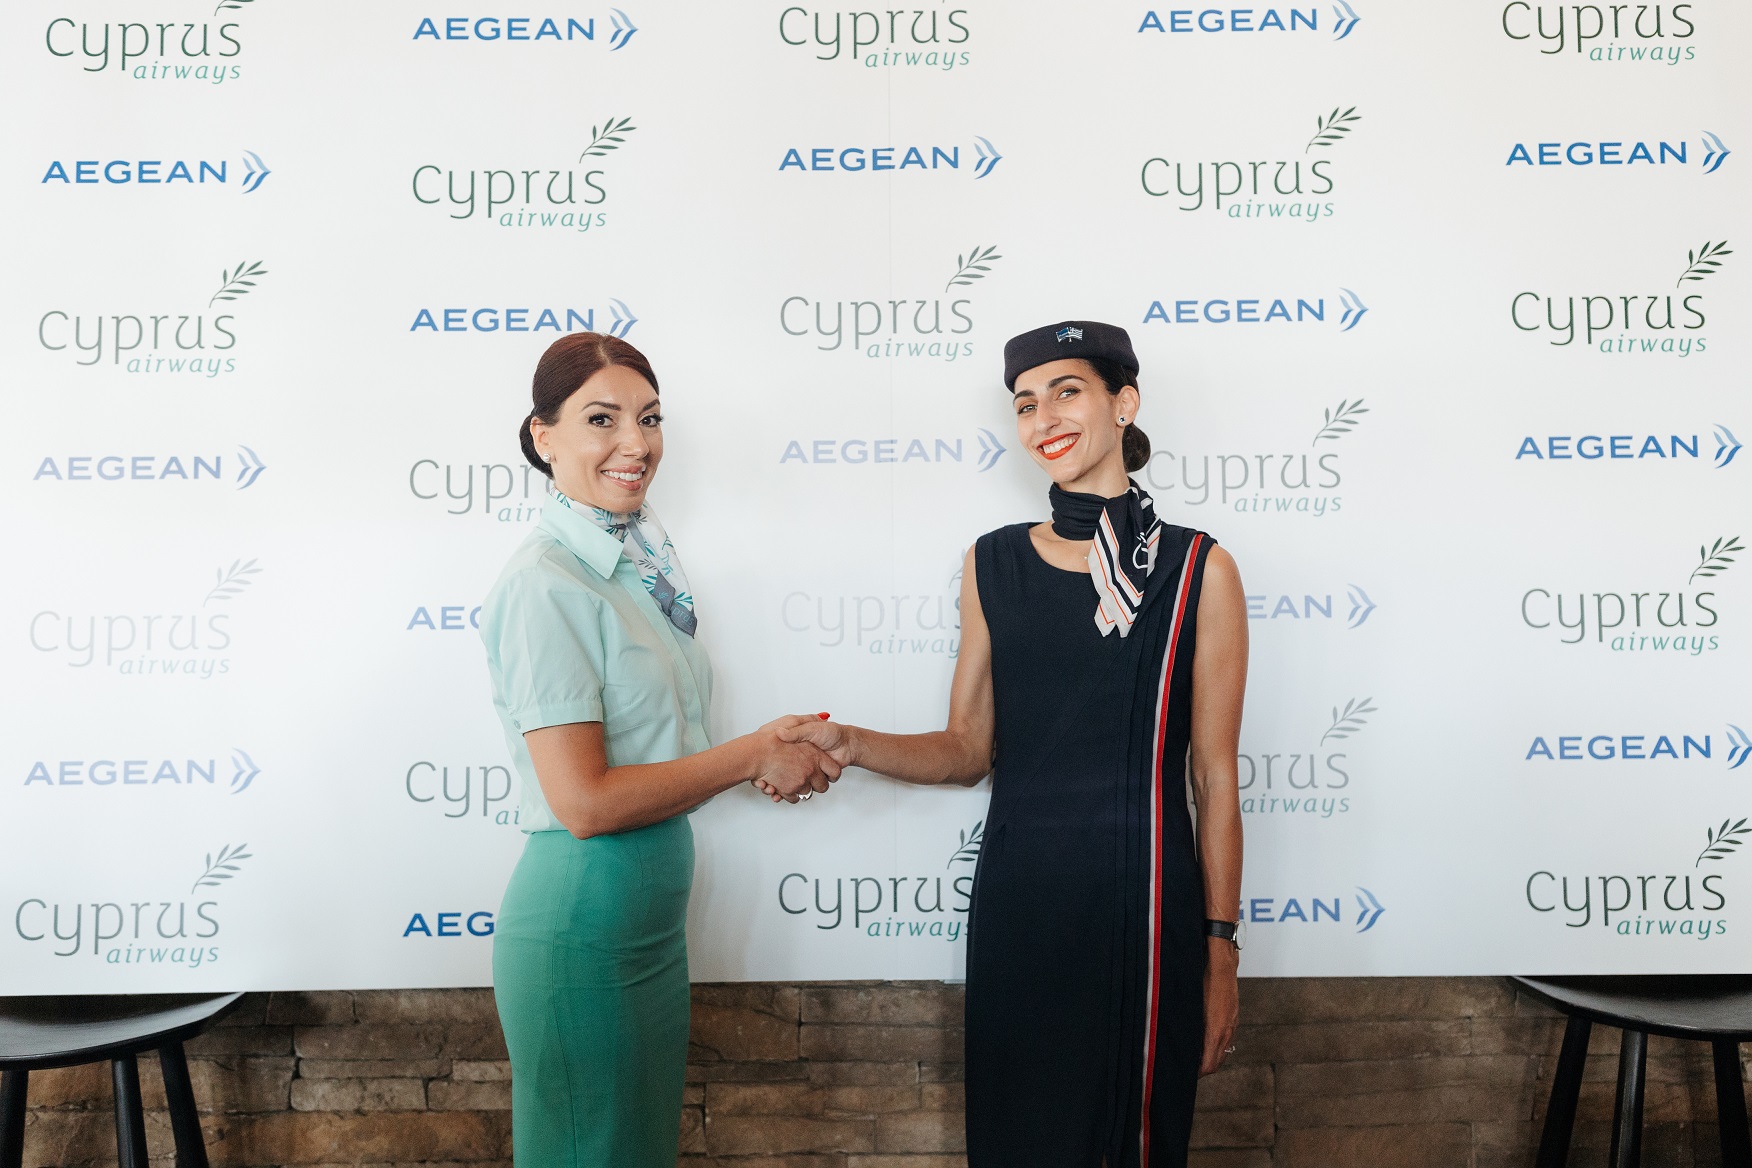  AEGEAN & Cyprus Airways Cabin Crew